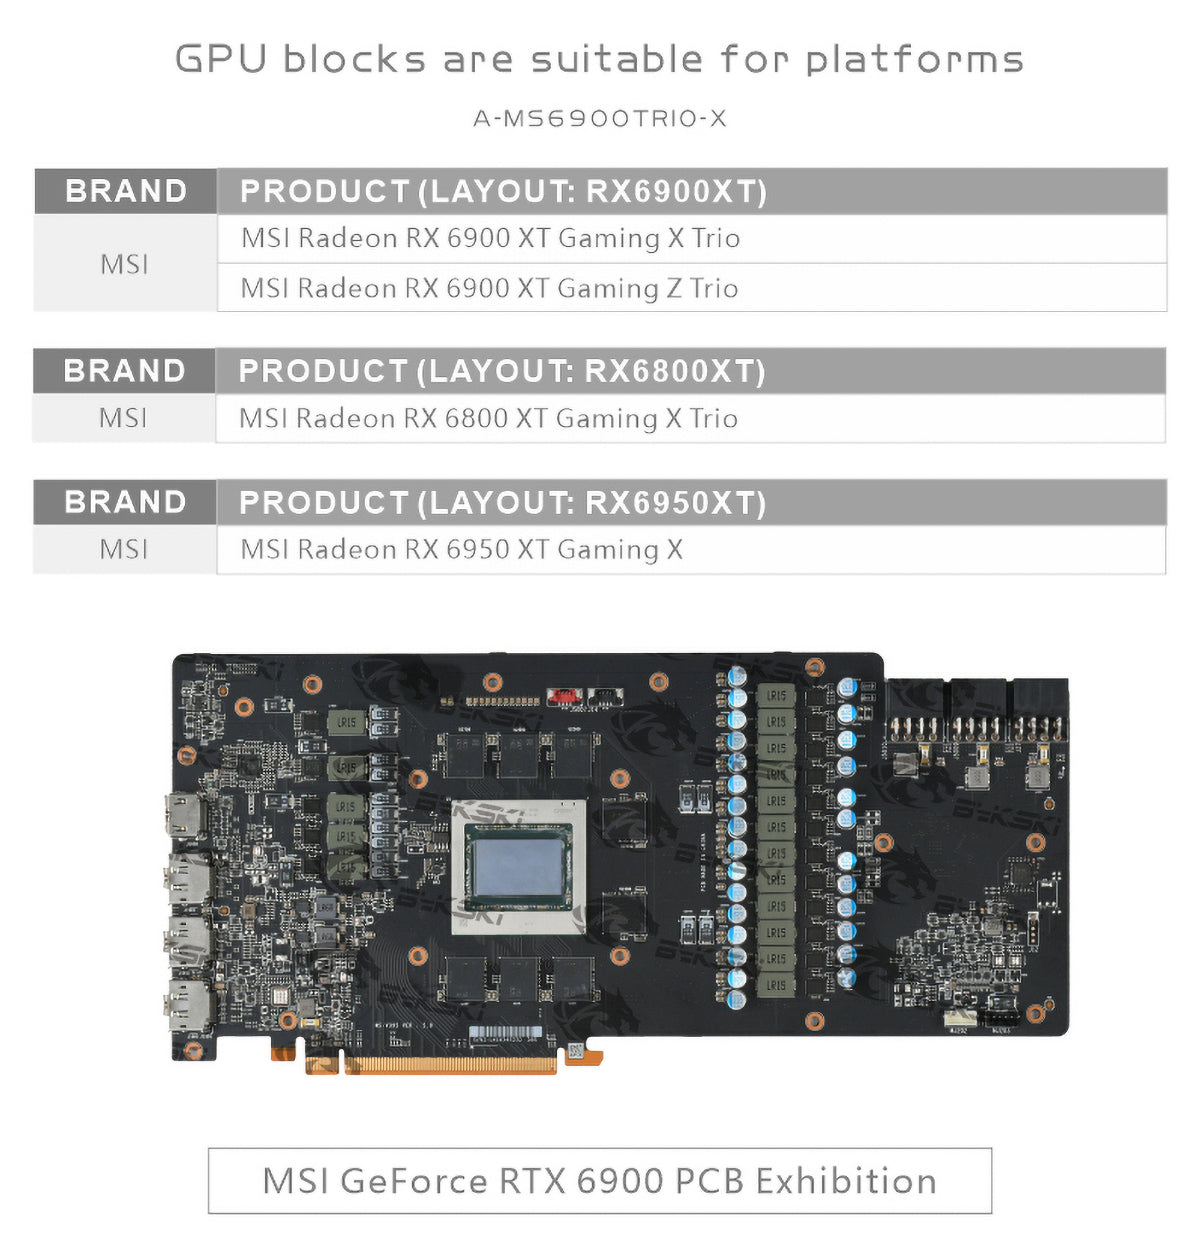 Bykski GPU Block For MSI RX 6900XT 6800XT 6950XT Gaming X Trio, Full Cover Liquid Cooler GPU Water Cooling A-MS6900TRIO-X